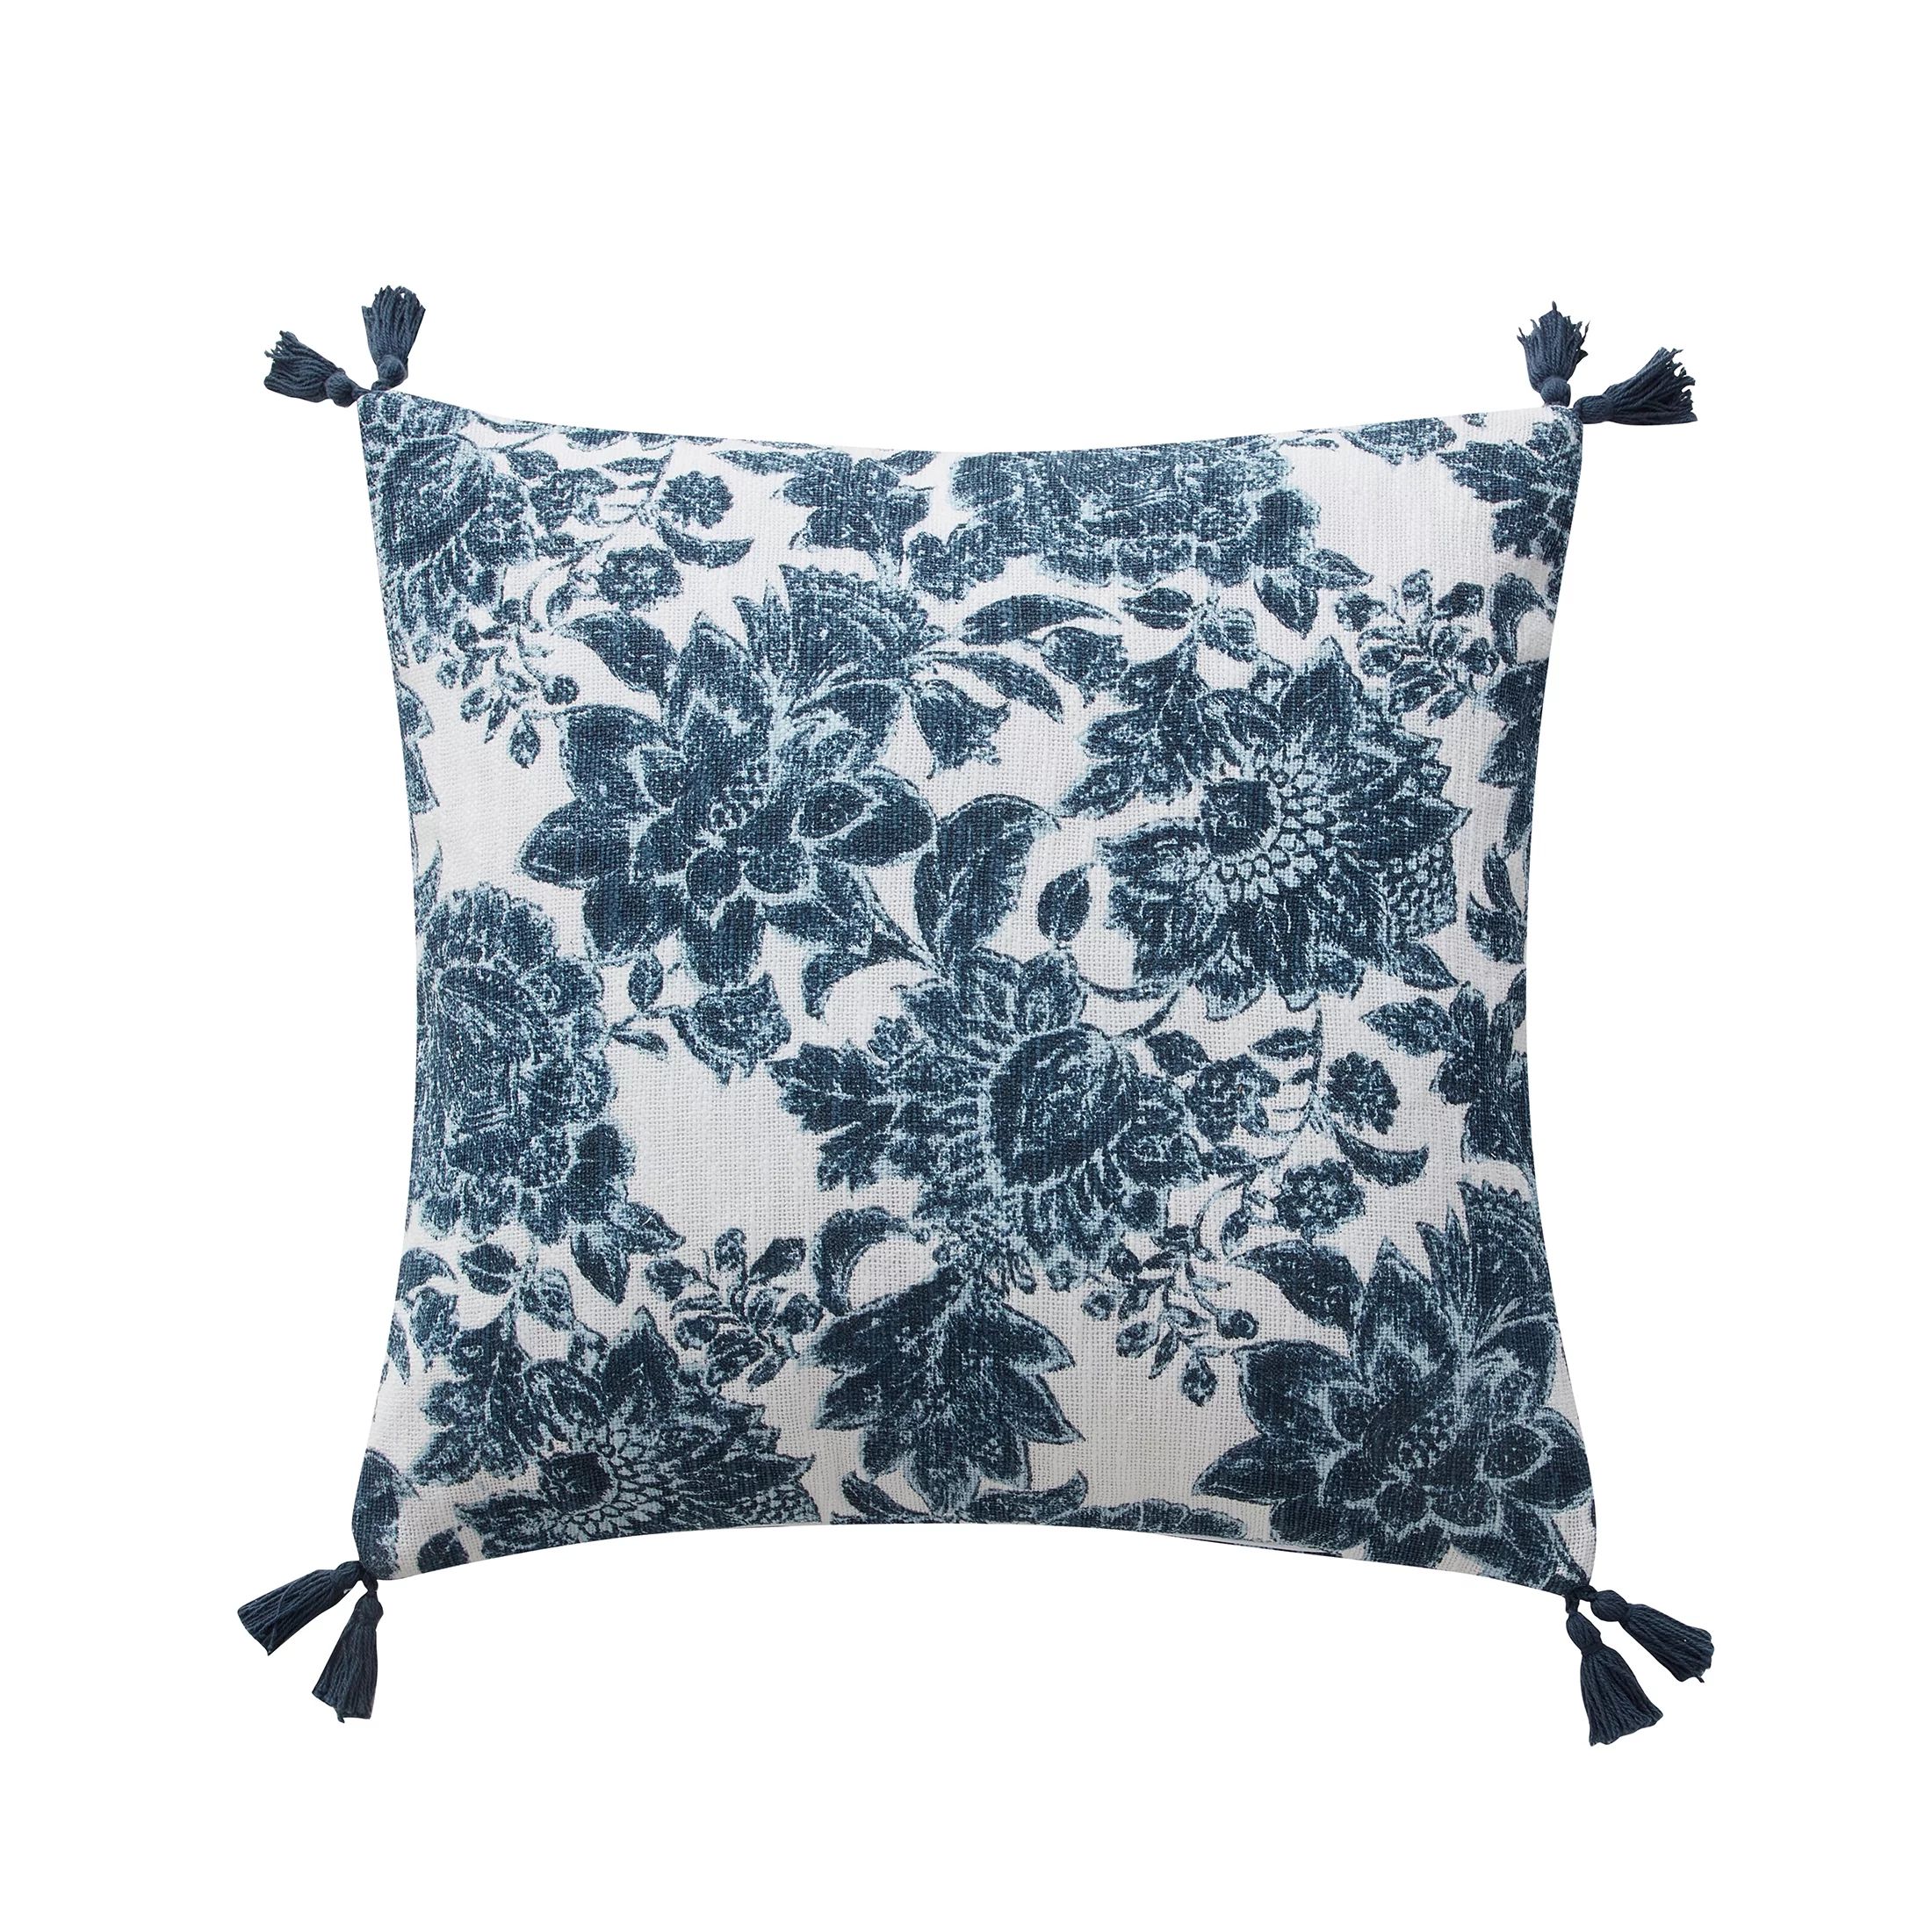 My Texas House 20" x 20" Blue Floral Cotton Decorative Pillow Cover | Walmart (US)